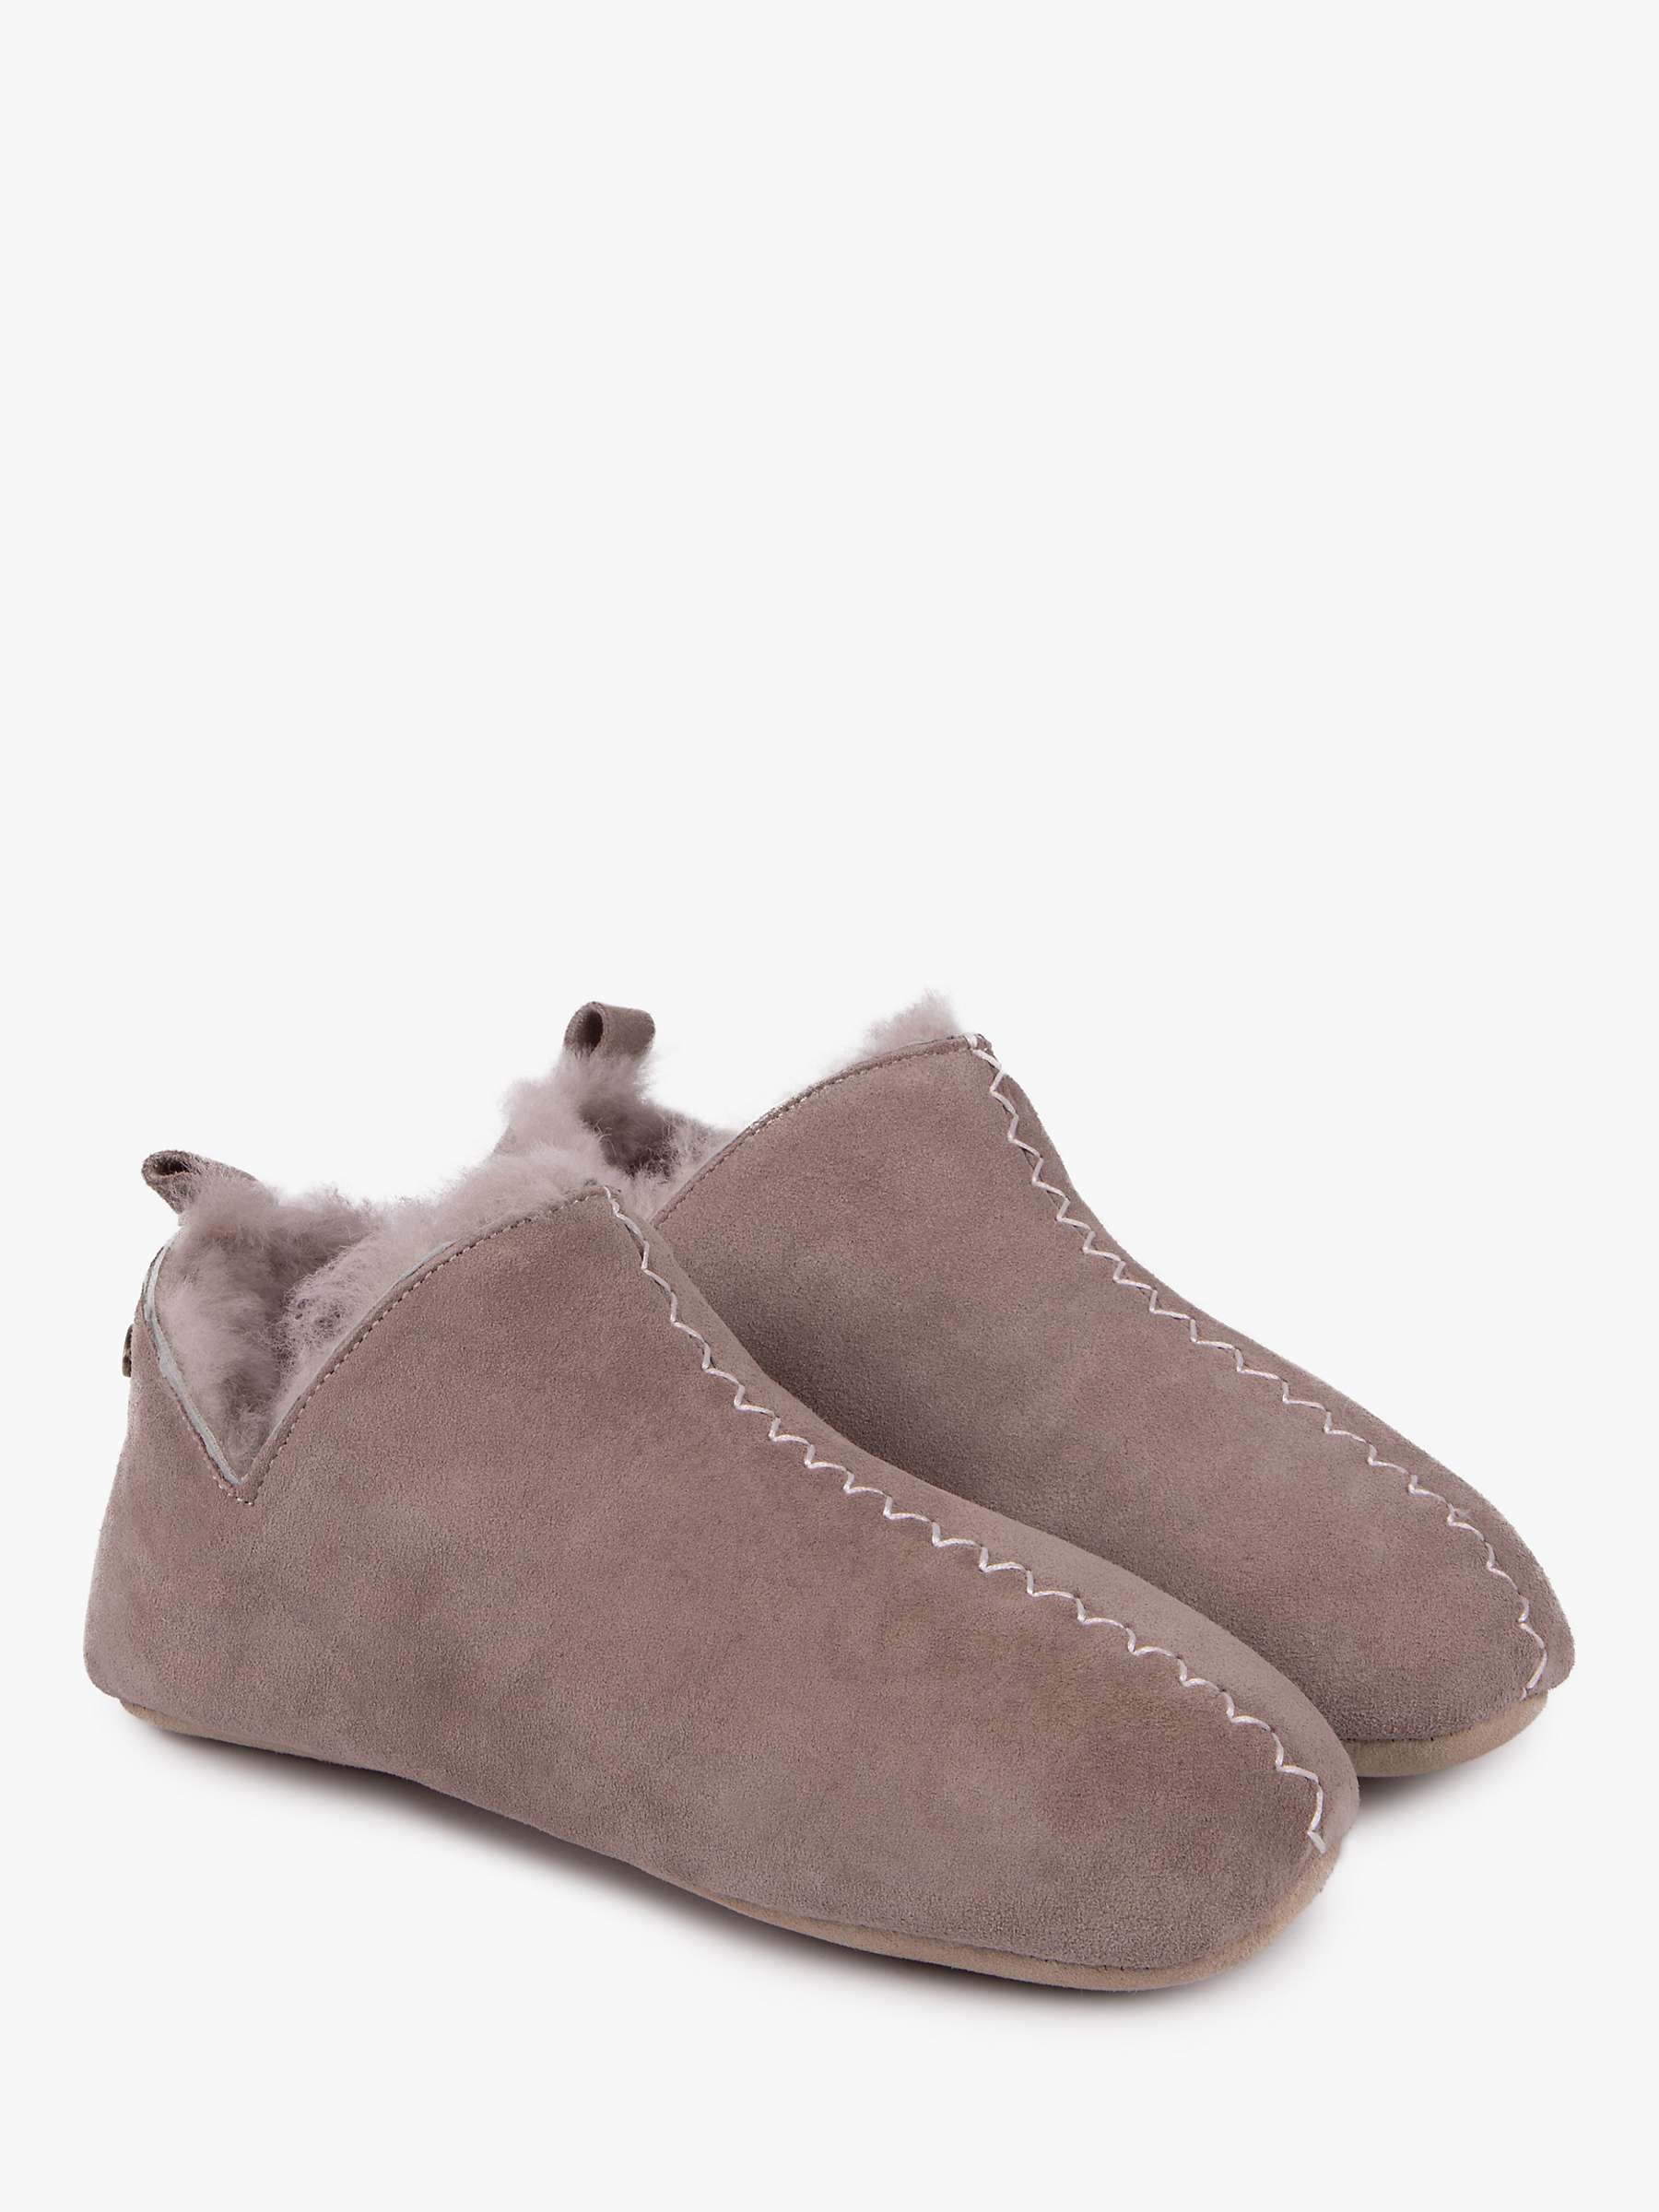 Buy Just Sheepskin Zara Pixie Boot Slippers, Mink Online at johnlewis.com